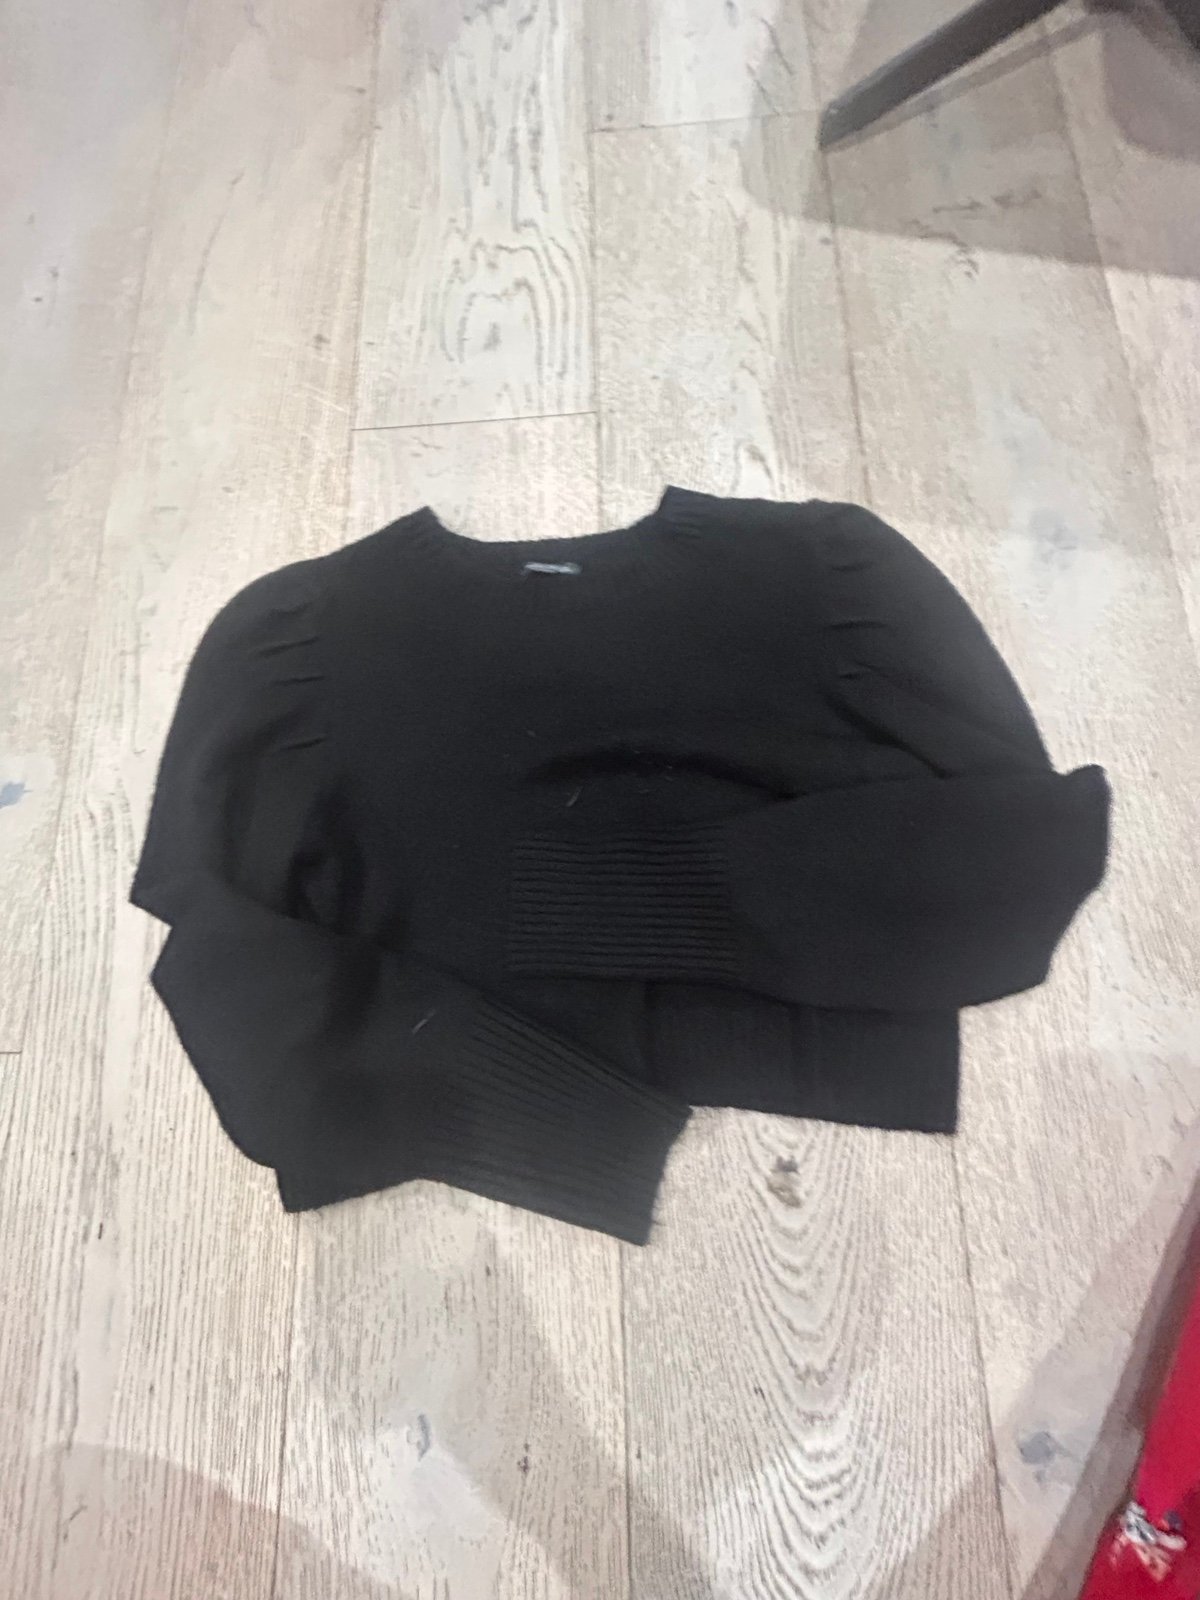 Discounted Black gap sweater lSilb6ycv online store